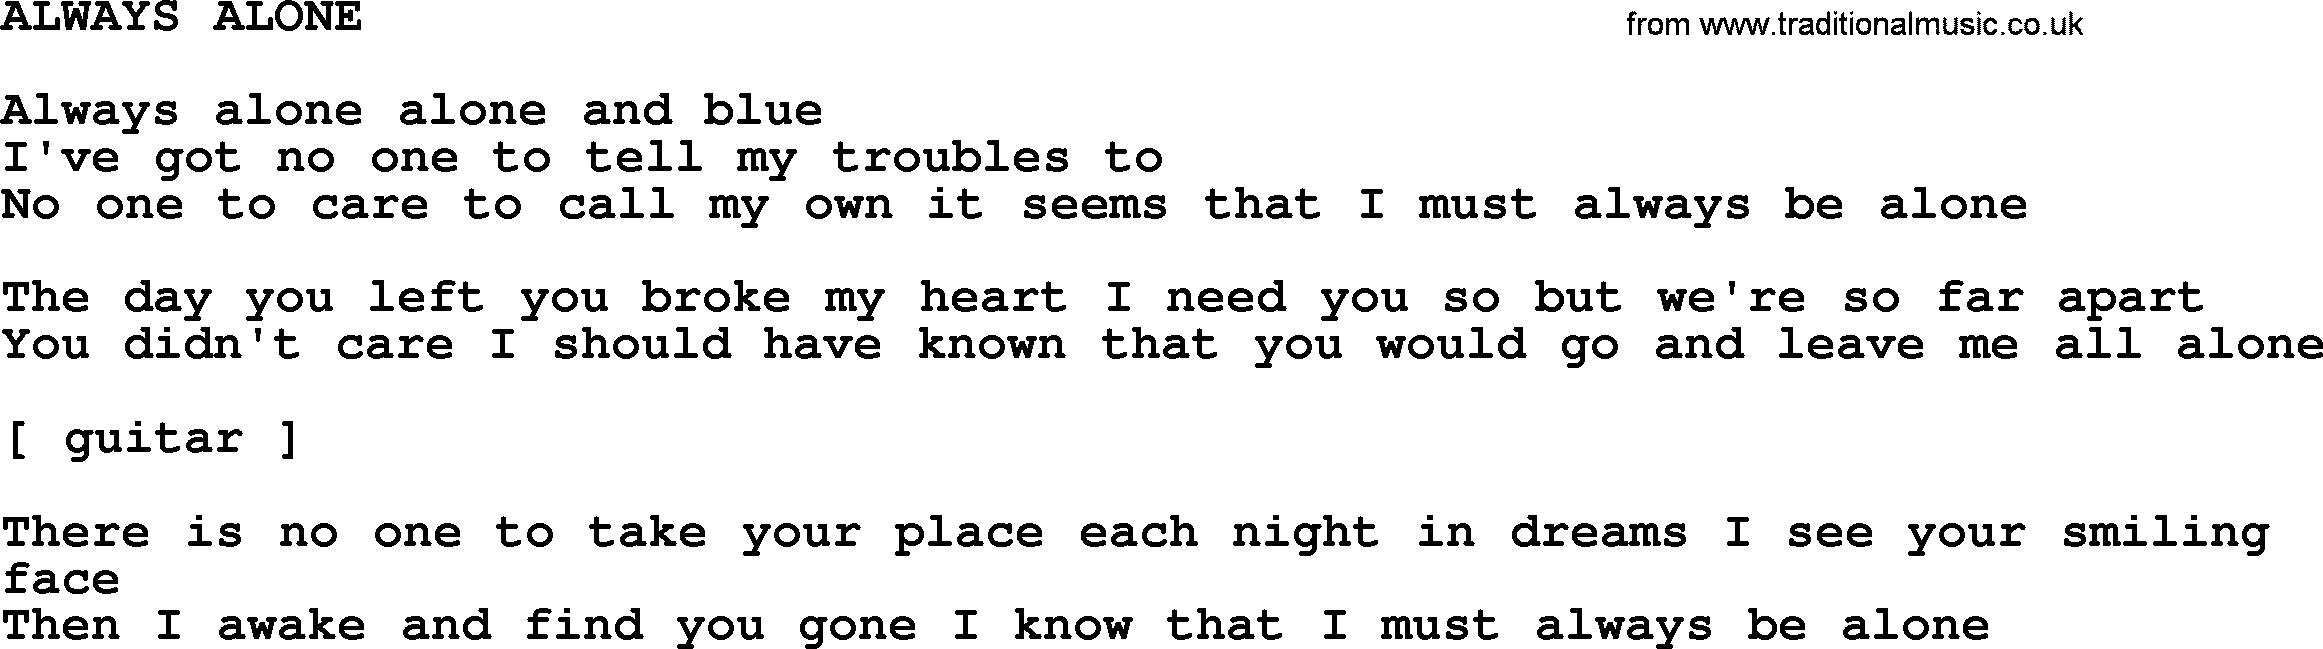 Johnny Cash song Always Alone.txt lyrics